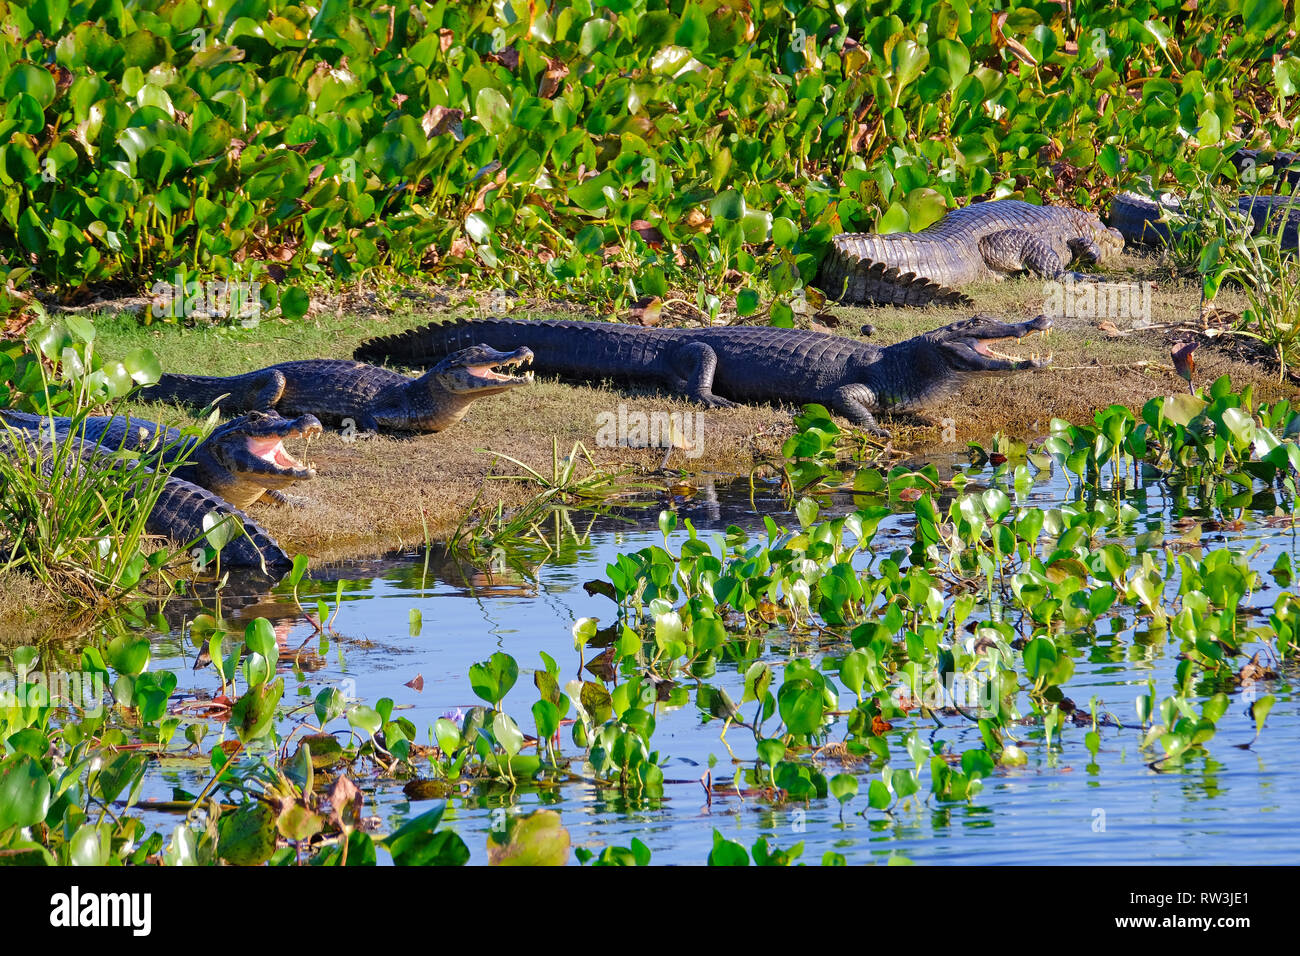 Yacare Caymans, Caiman Crocodilus Yacare Jacare, in the grassland of Pantanal wetland, Corumba, Mato Grosso Sul, Brazil Stock Photo